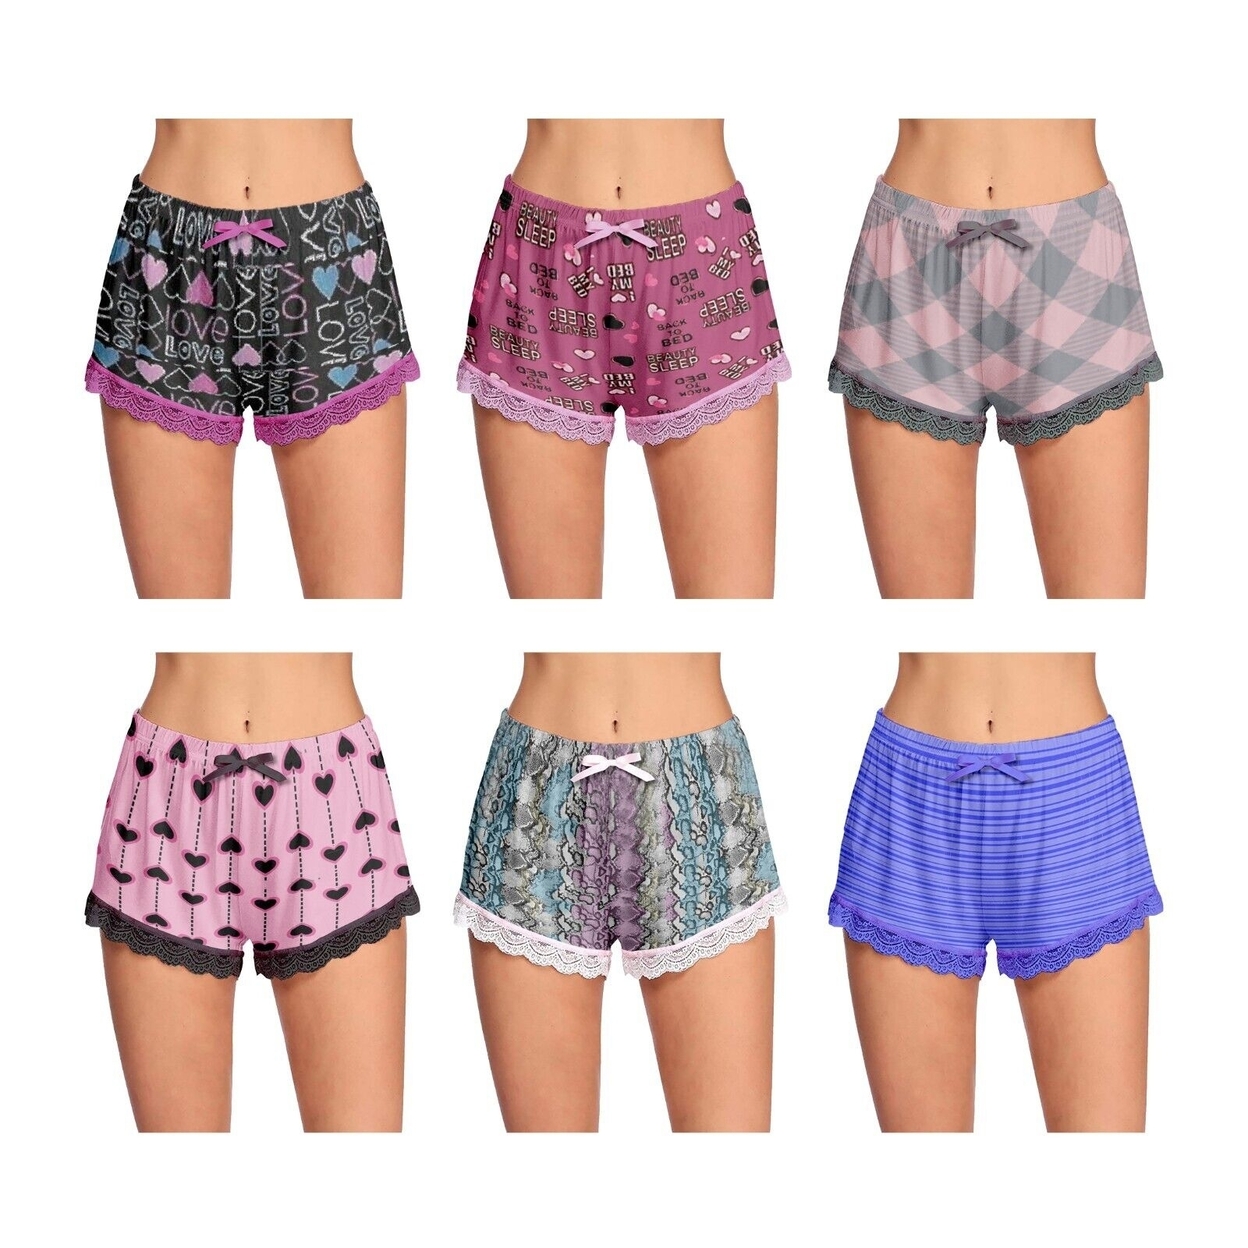 4-Pack: Women's Ultra-Soft Cozy Fun Printed Lace Trim Pajama Lounge Shorts - Medium, Shapes